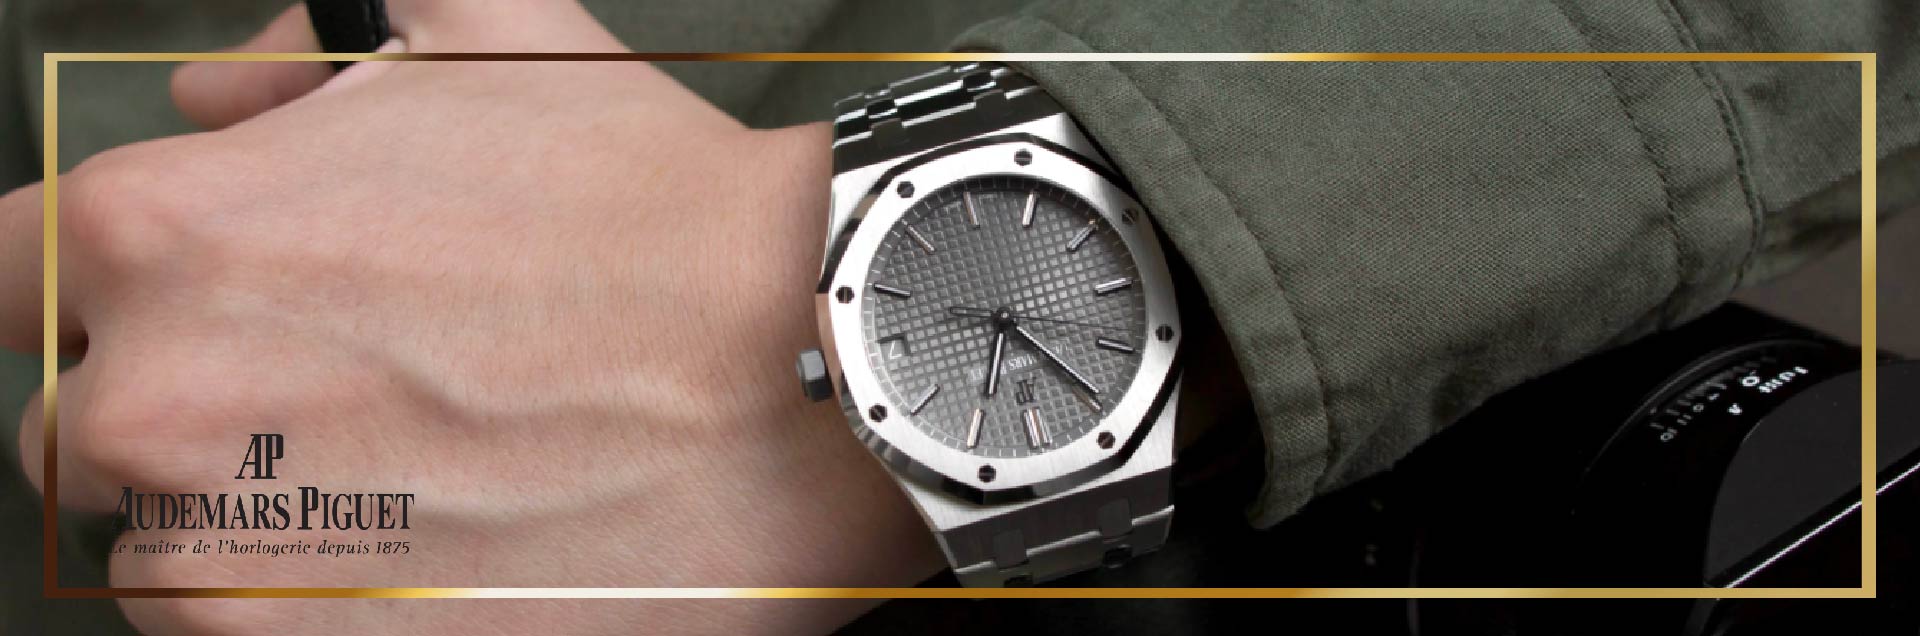 sell Audemars Piguet watch in miami